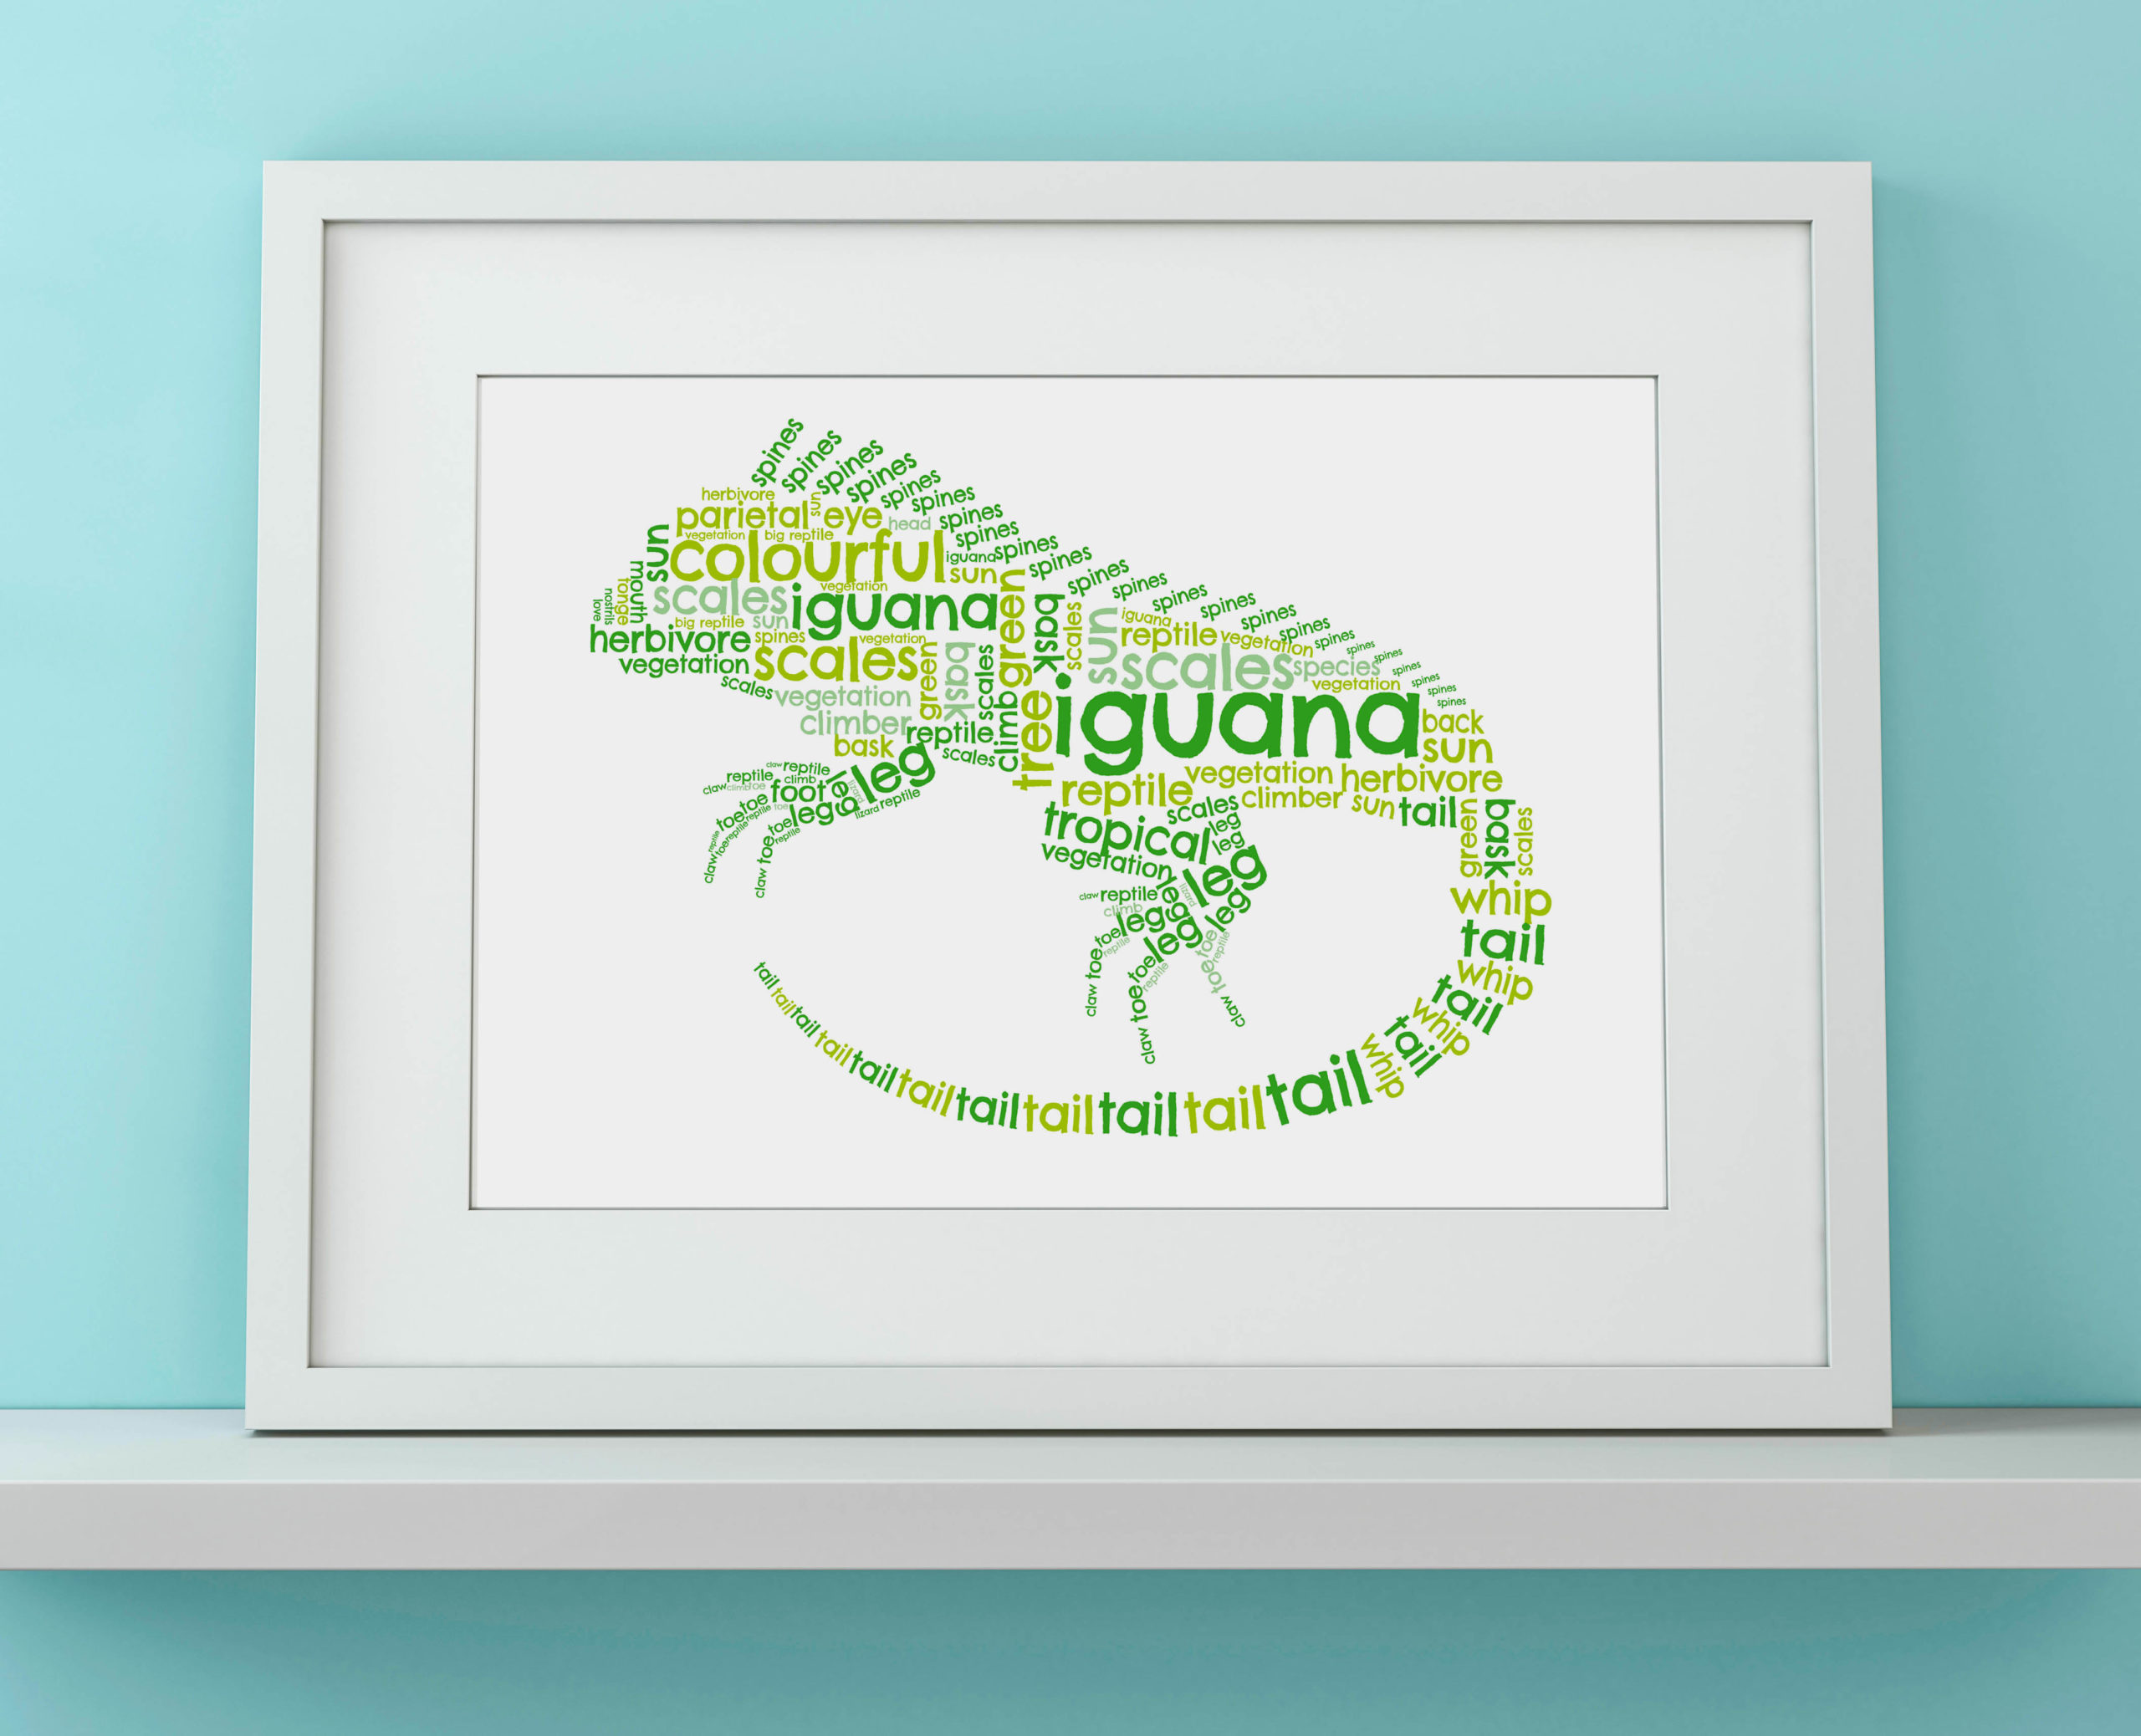 <img src="green.jpg" alt="green iguana frame"/> 